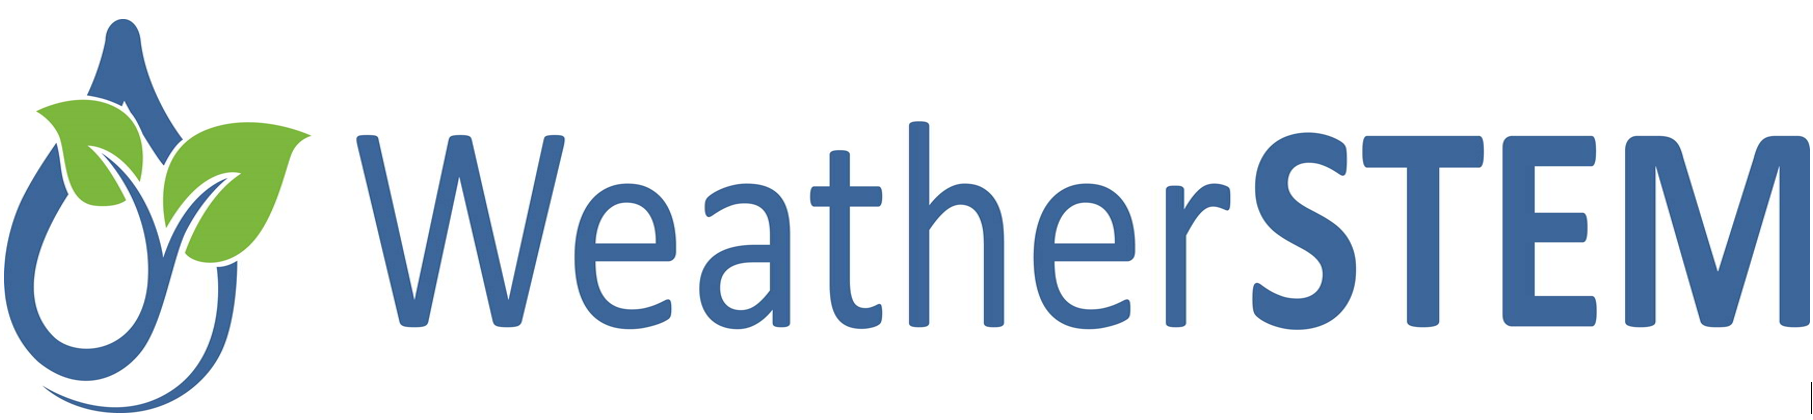 weatherstem_logo